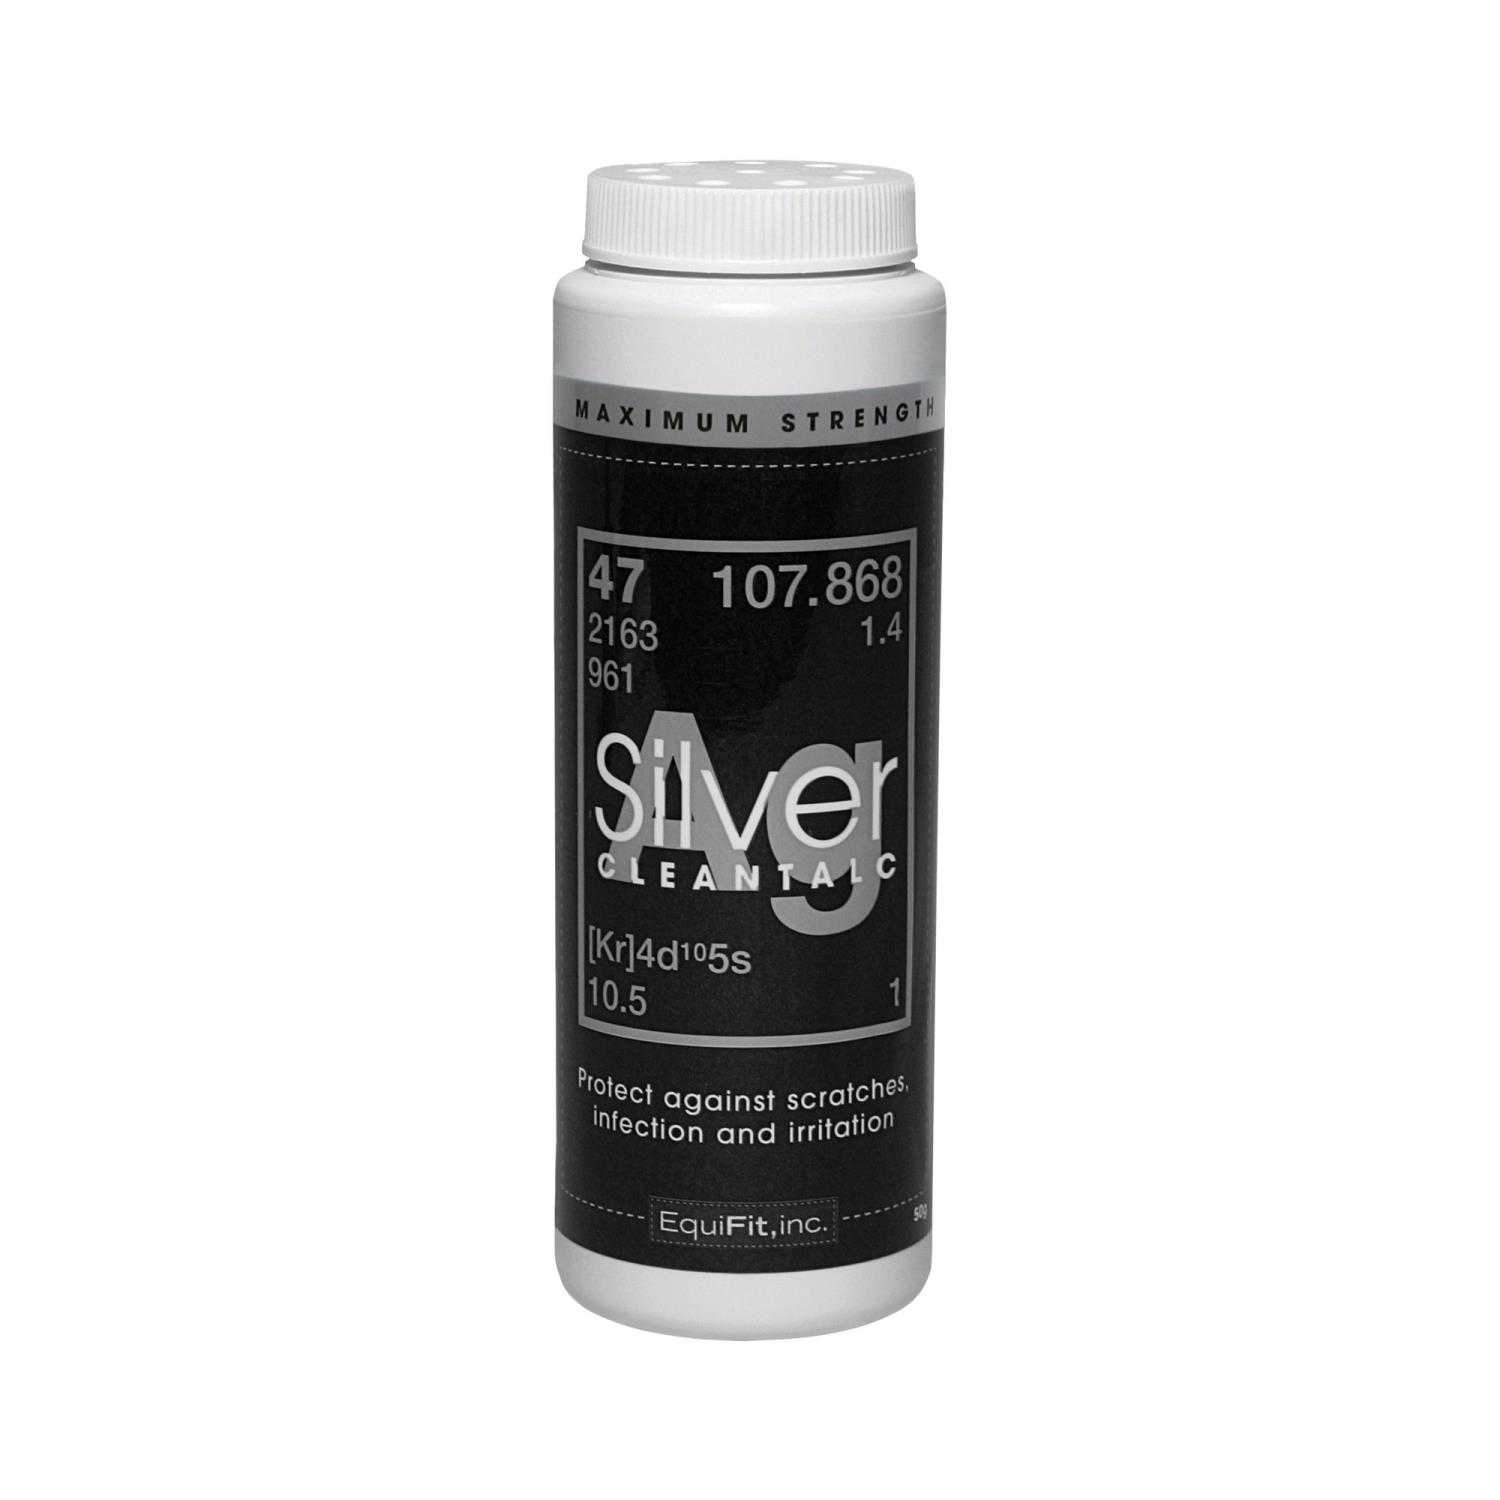 AG silver cleantalc